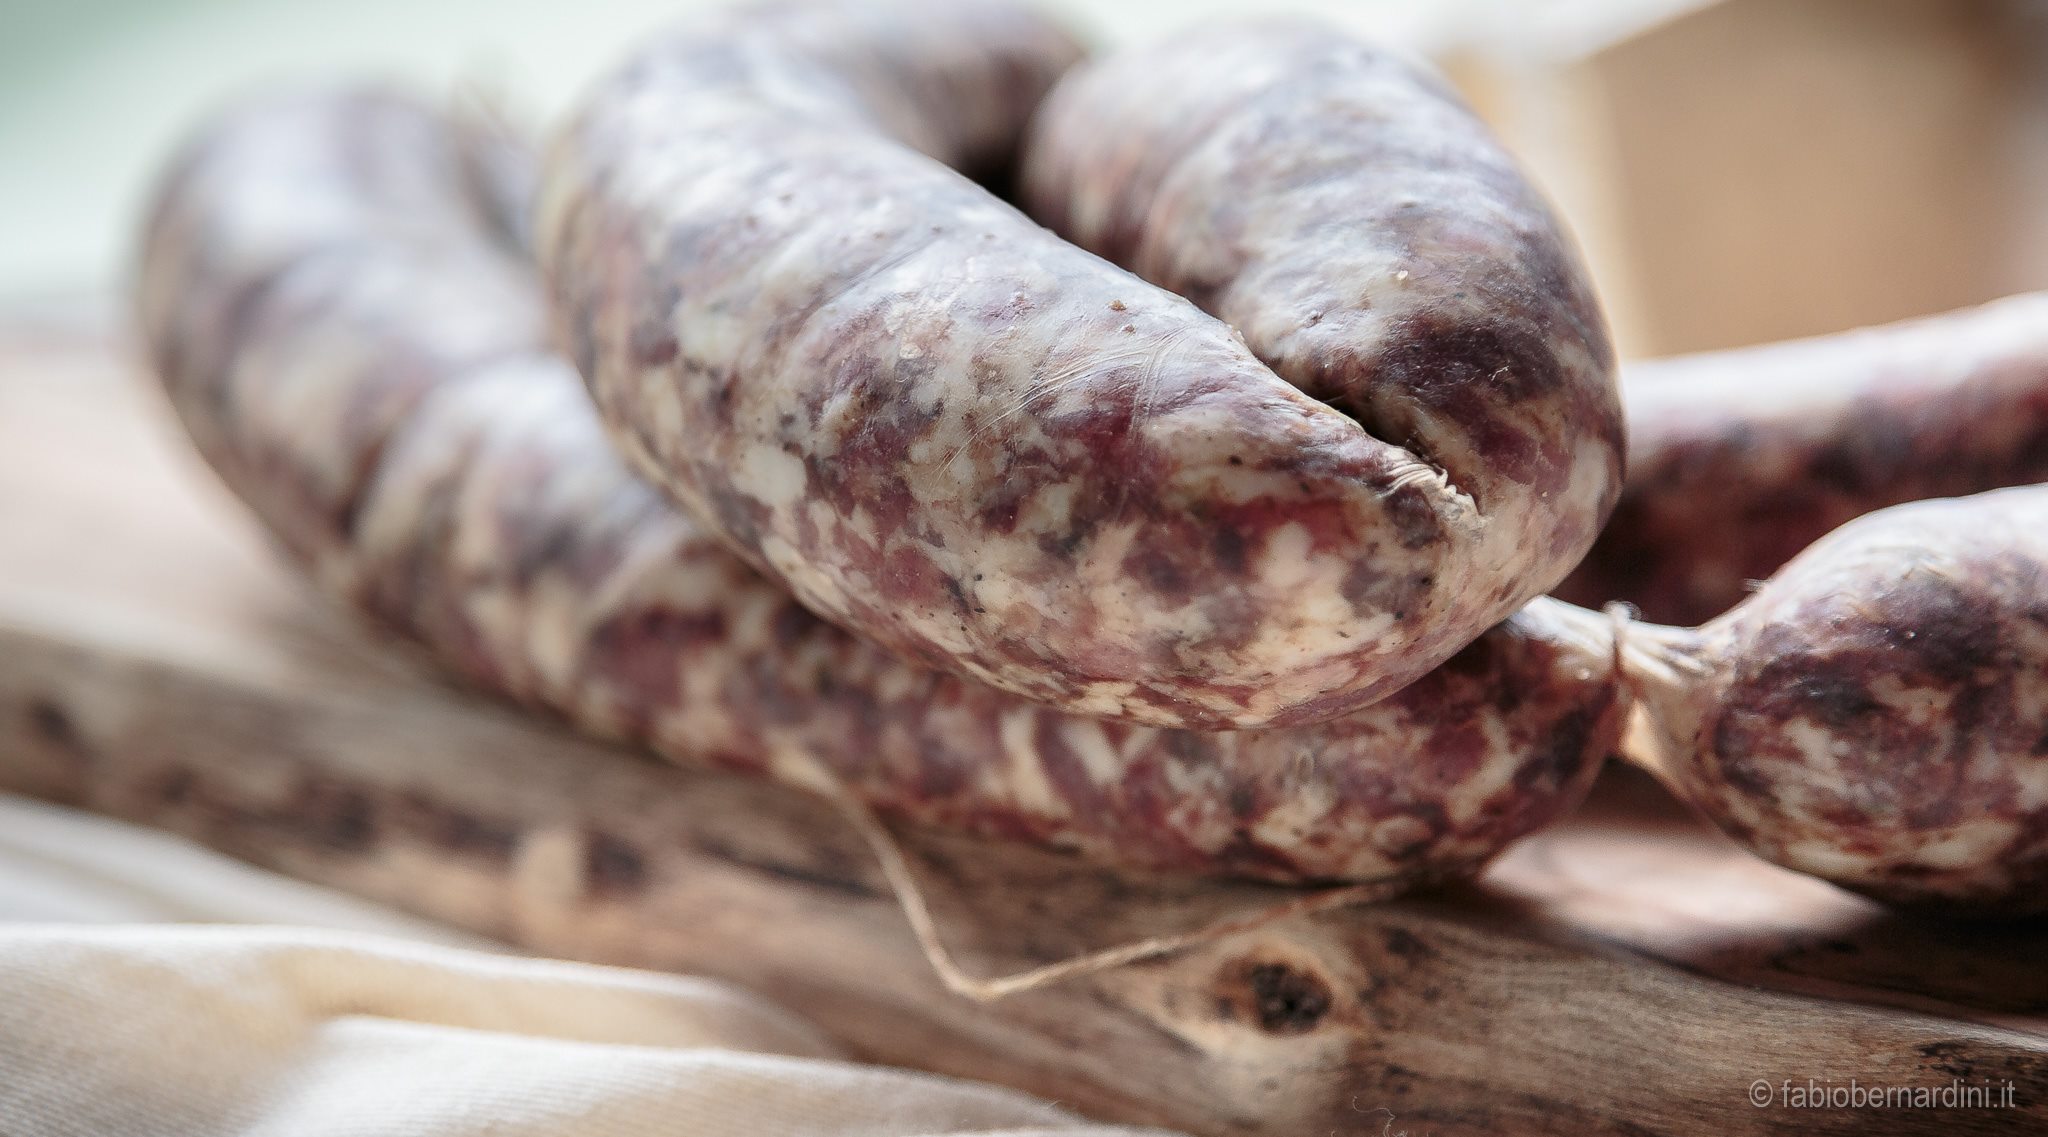 Rethinking the sausage. Bardiccio comes from the Valdisieve/Valdarno areas of Tuscany.